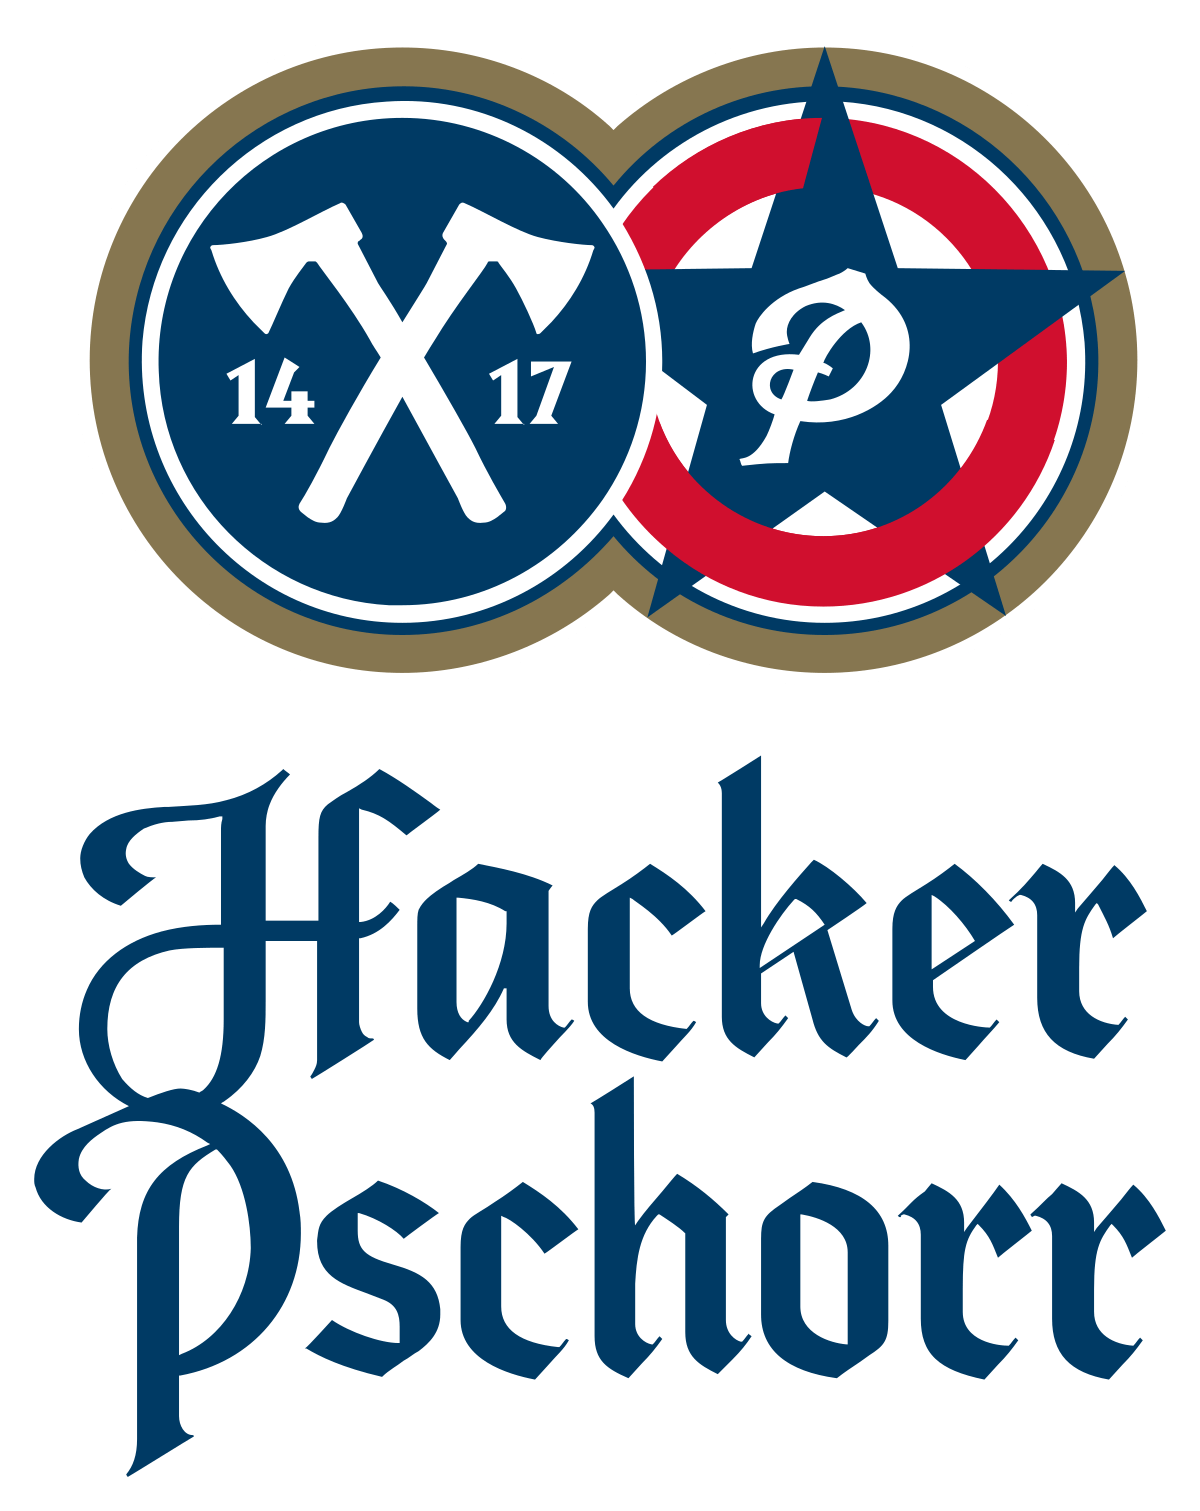 Hacker-Pschorr Logo - Hacker Pschorr